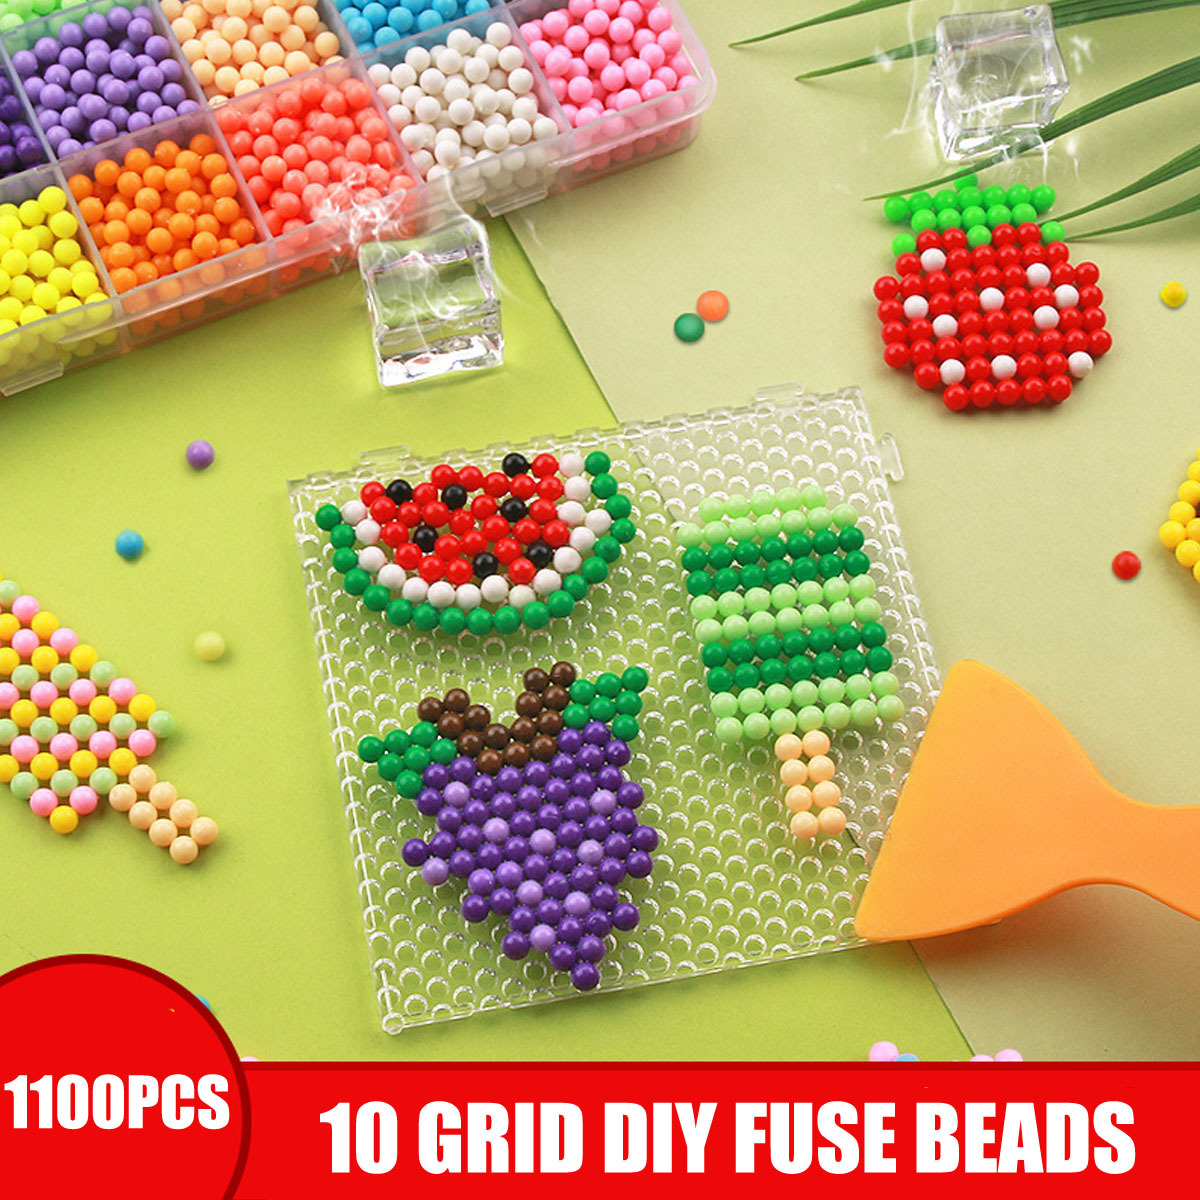 1100pcs-10-Grid-DIY-Fuse-Beads-Water-Sticky-Beads-Art-Craft-Toys-Kids-1374924